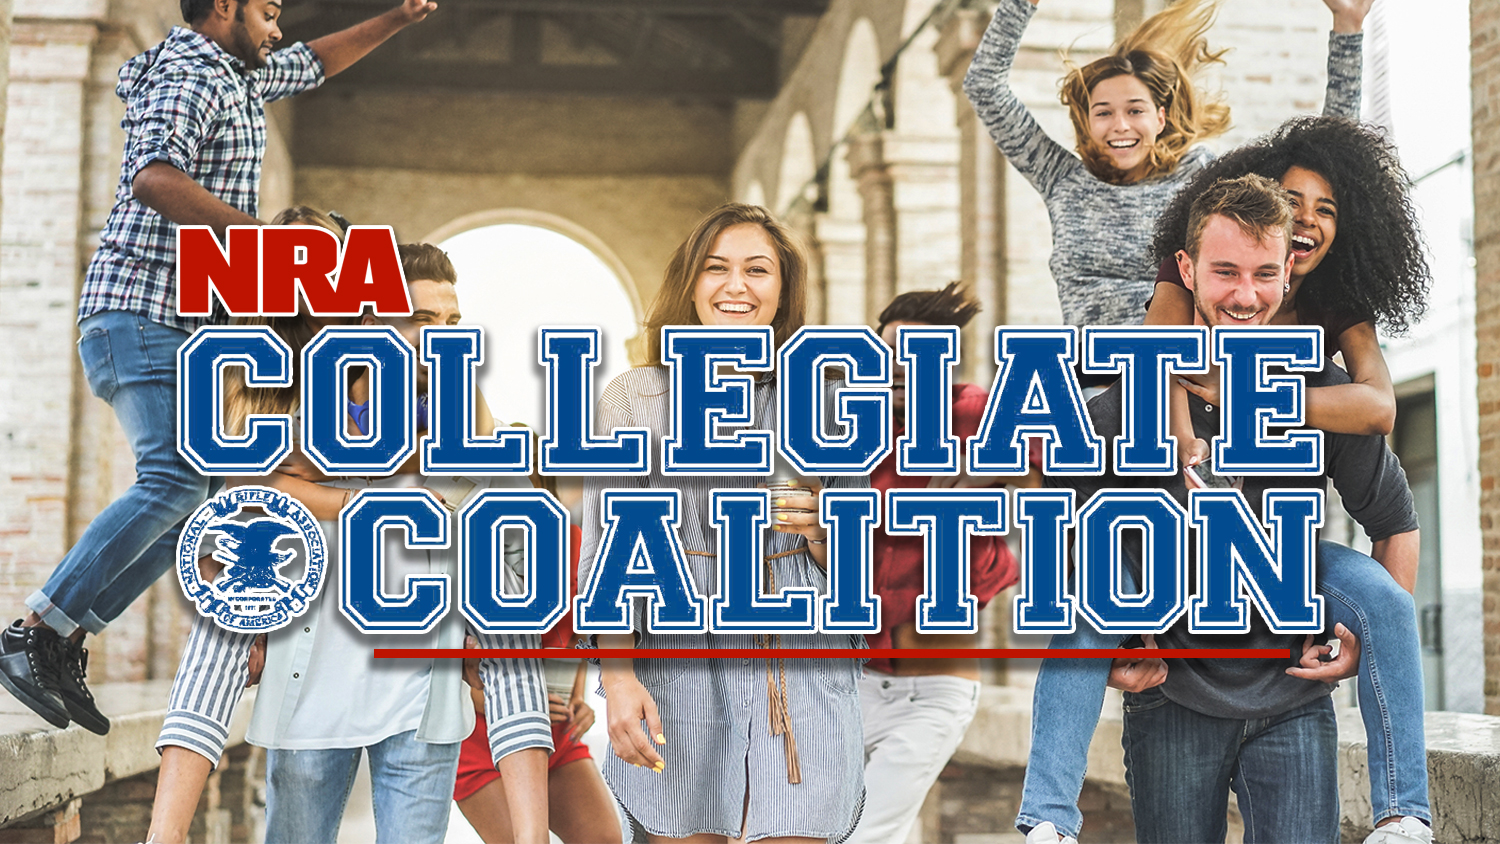 Start an NRA Collegiate Coalition